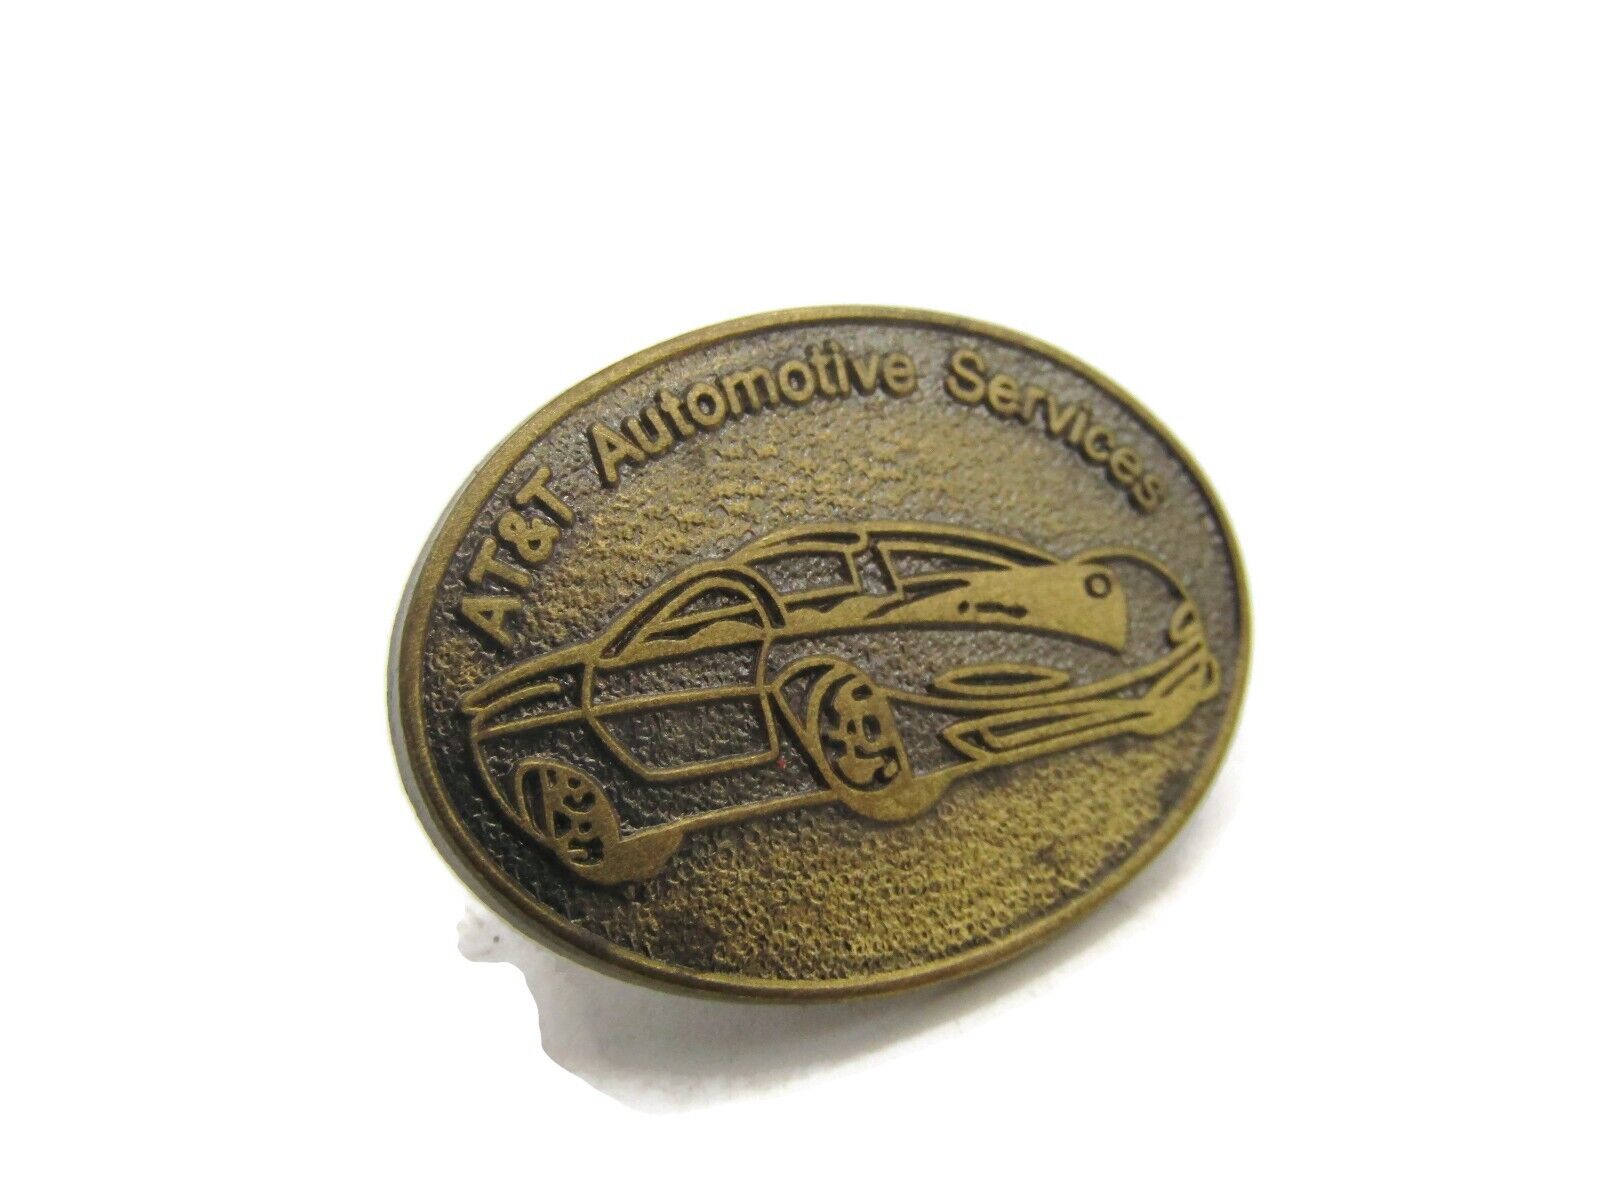 AT&T Automotive Services Pin Vintage Nice Design